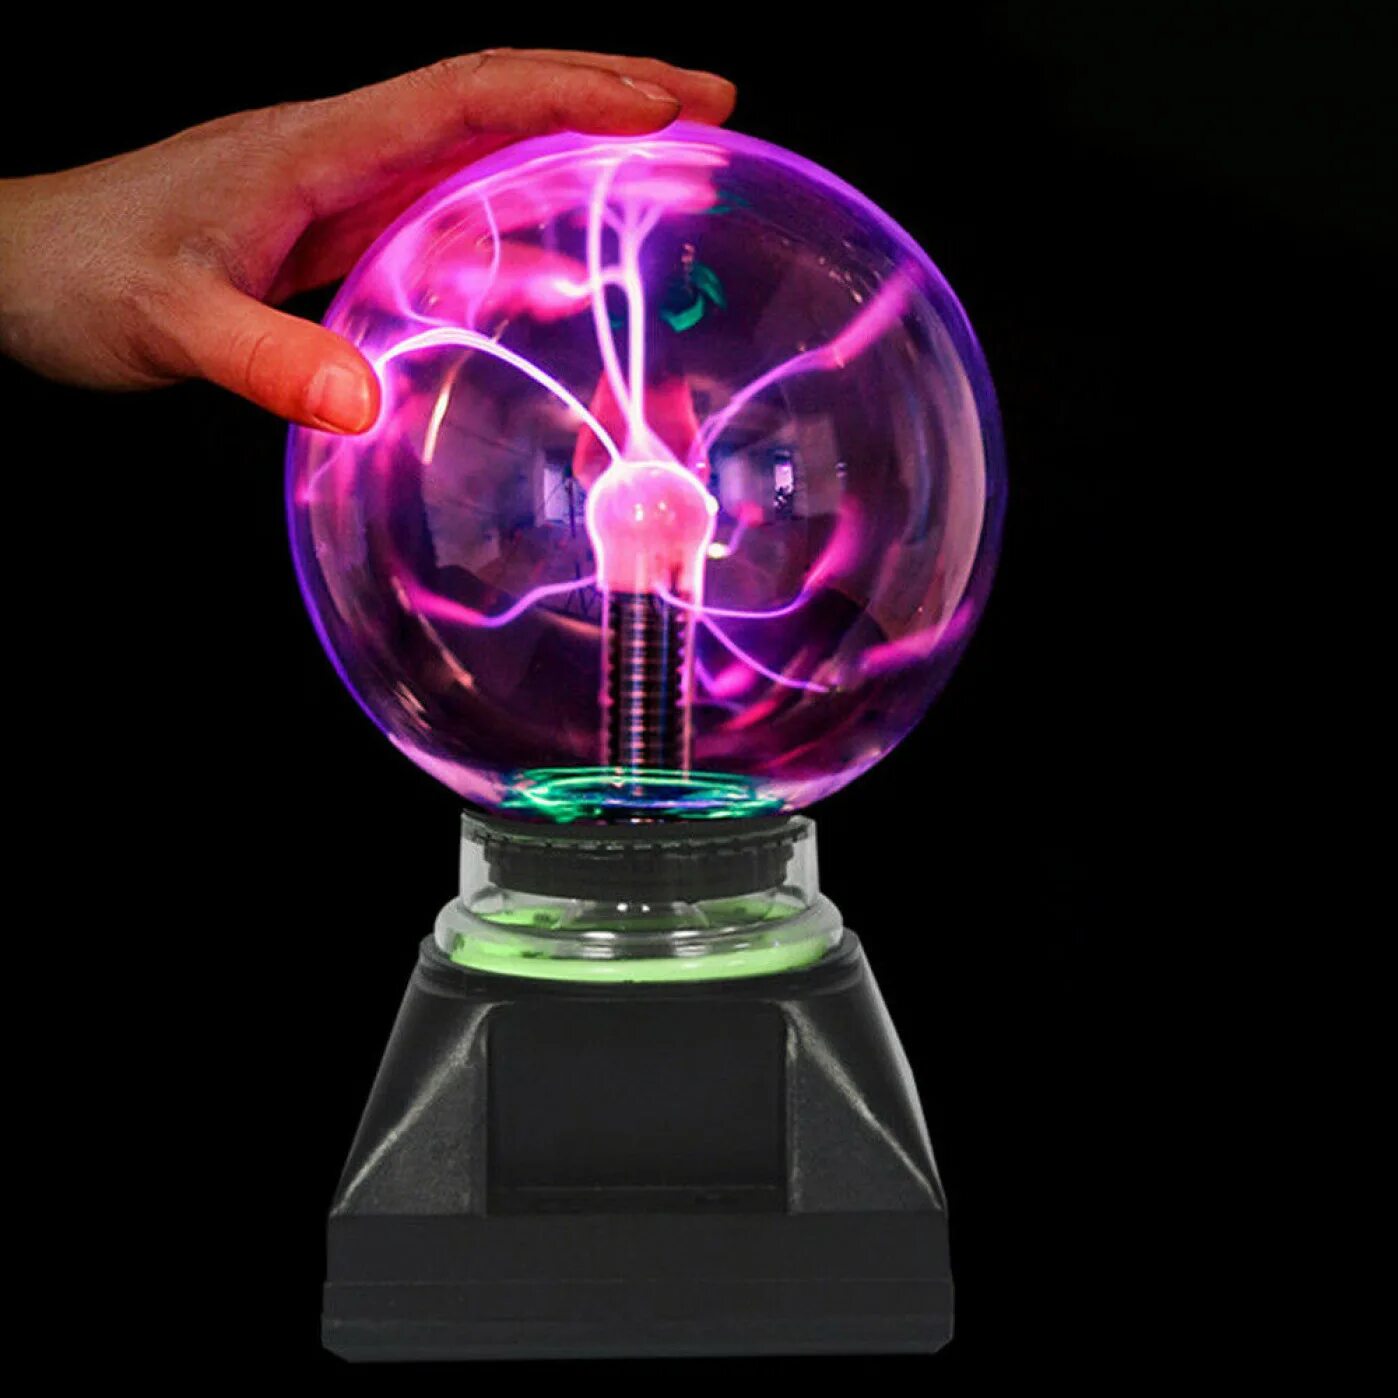 Плазма шаров. Плазменная лампа "шар Тесла". Ночник "Plasma Light" плазменный шар. Электрический плазменный шар Тесла. Тесла светильник плазма шар.